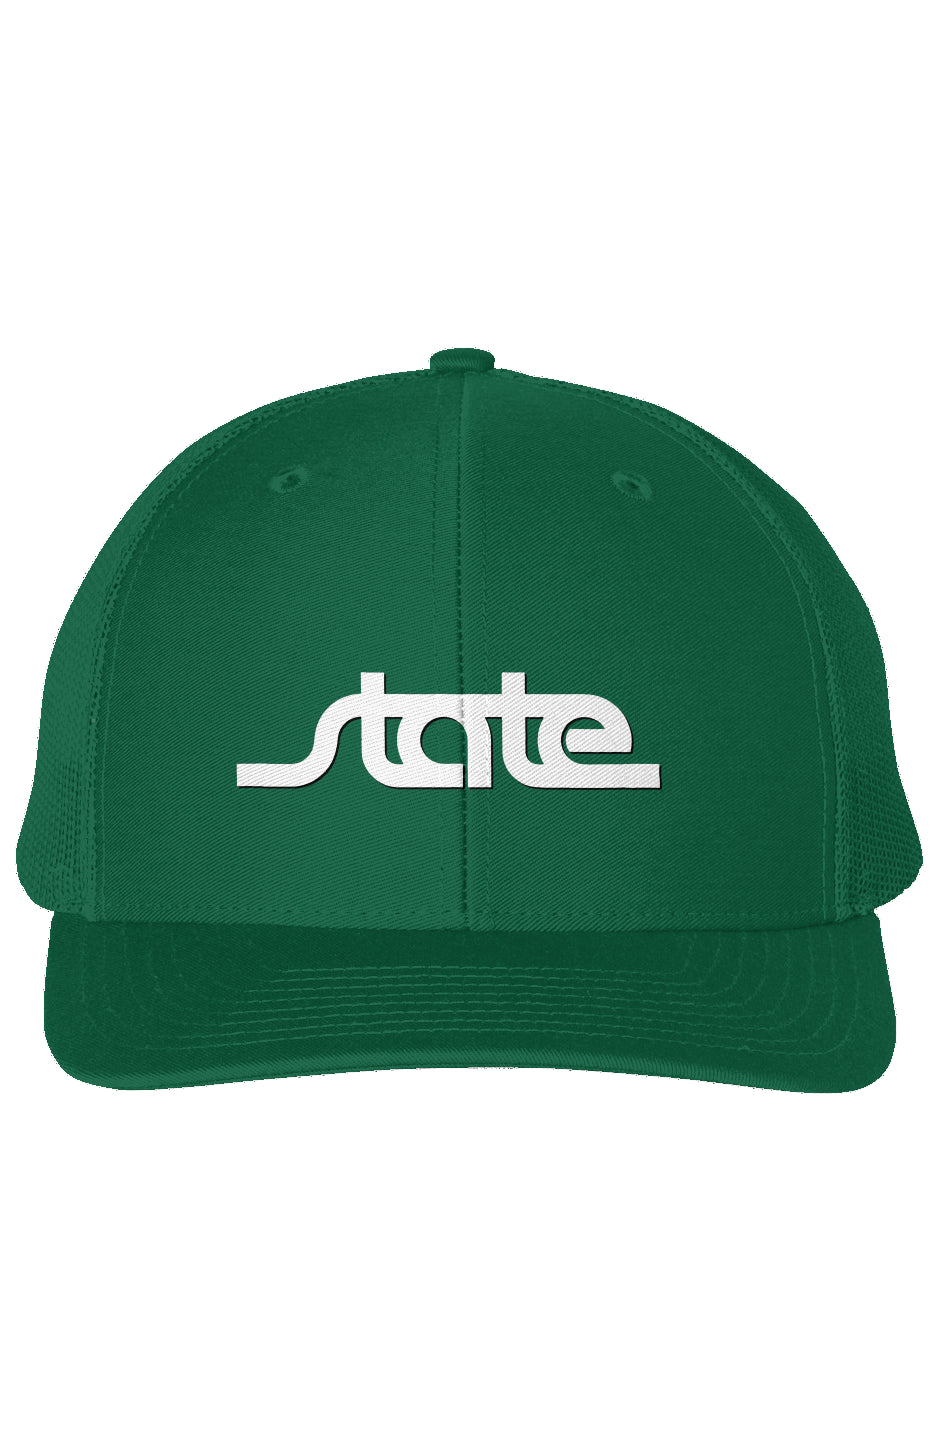 State Script Green Trucker Hat